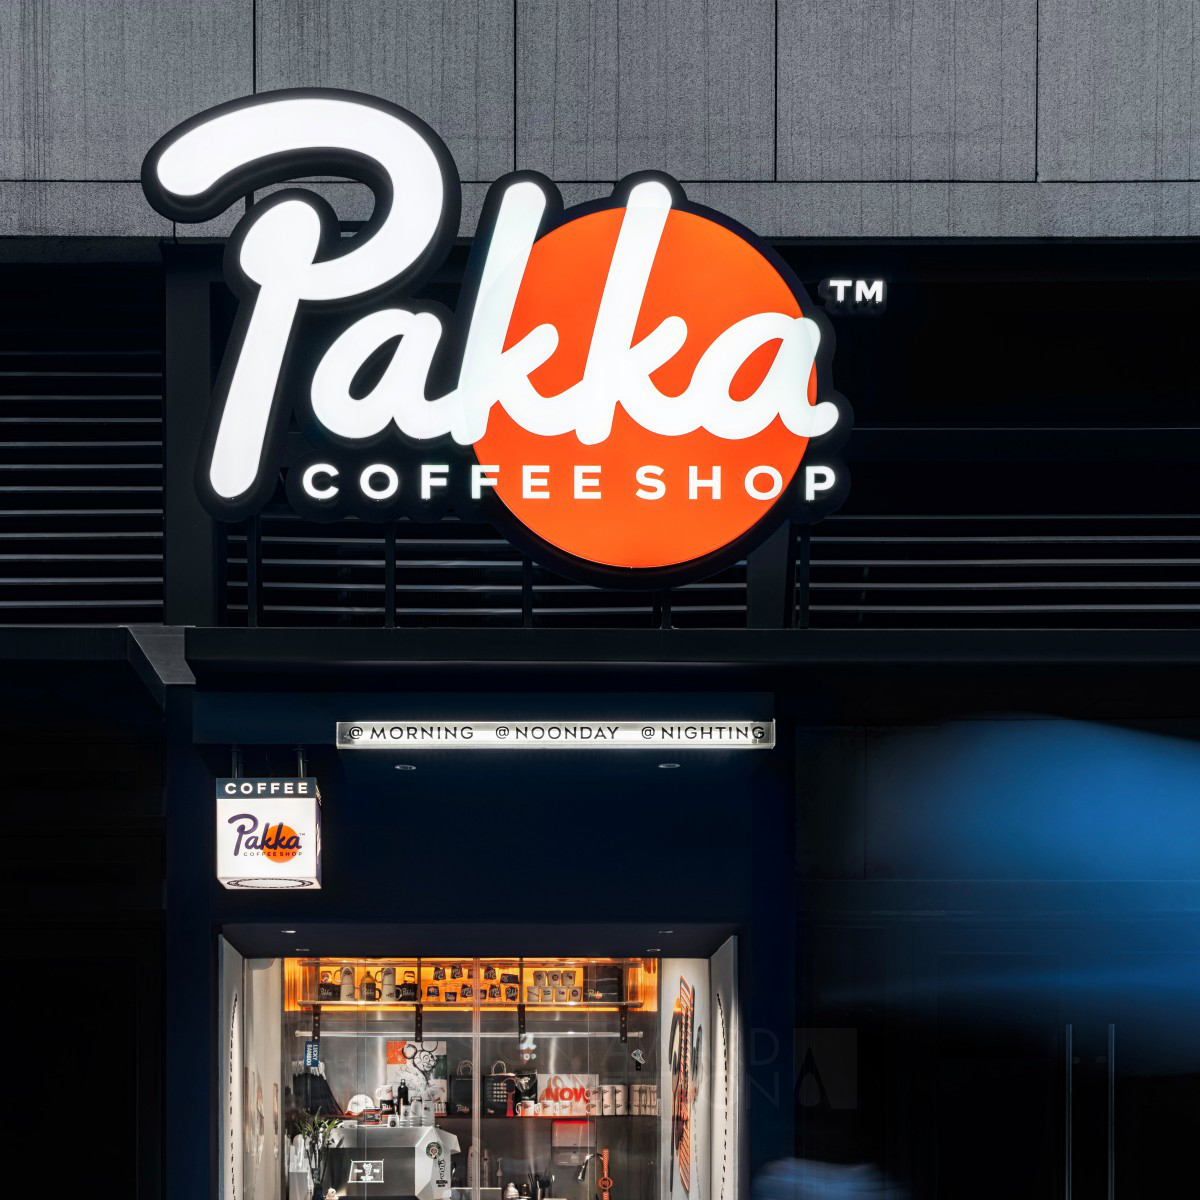 Pakka Coffee Shop Brand Image by Sersen(SZ)Brand consulting Co., Ltd